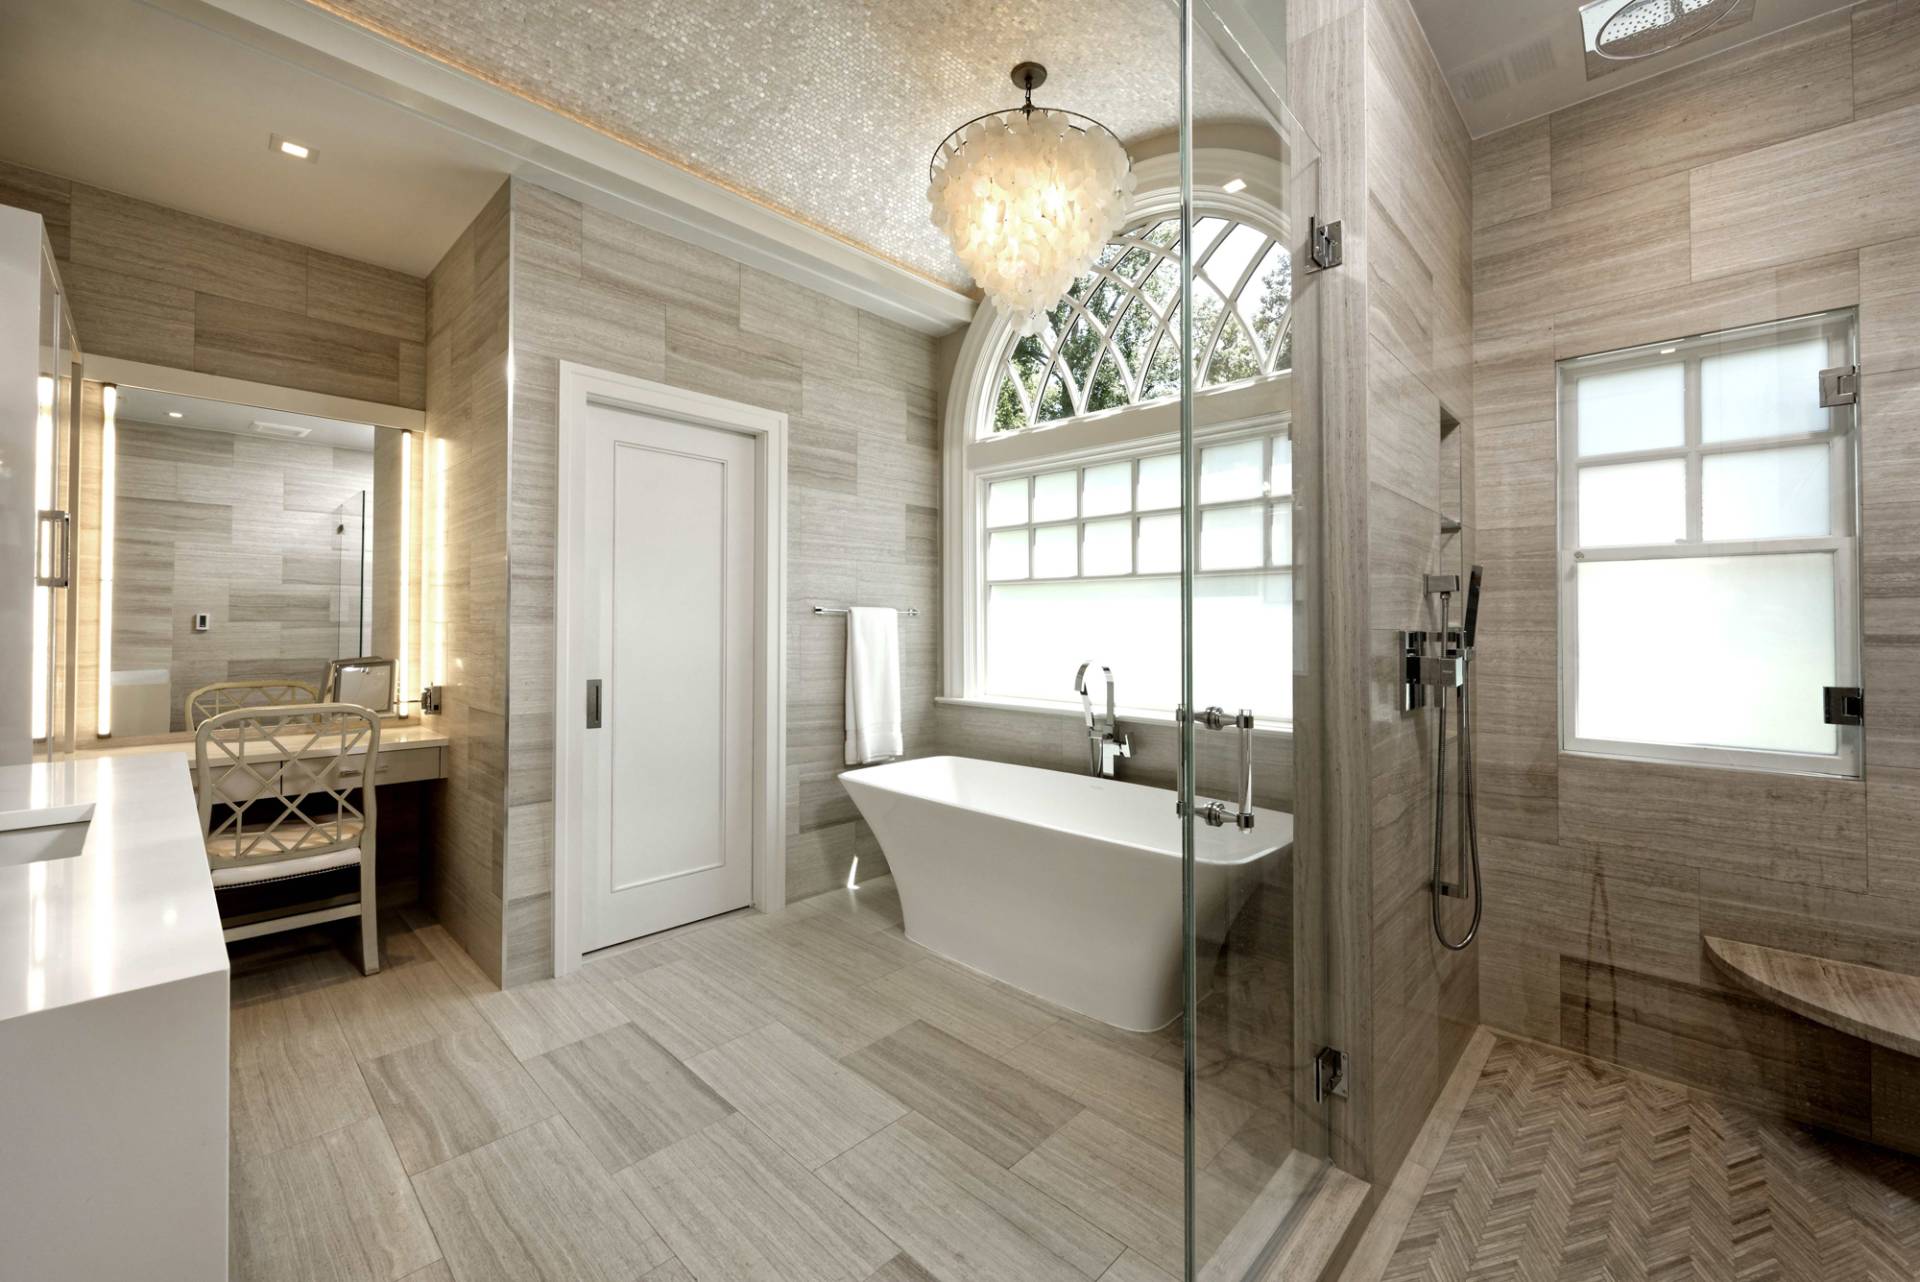 SUB McLean Custom Design Build Luxury Master Bath Closet Renovation D19154 9009 01 03 1 1920x1282 